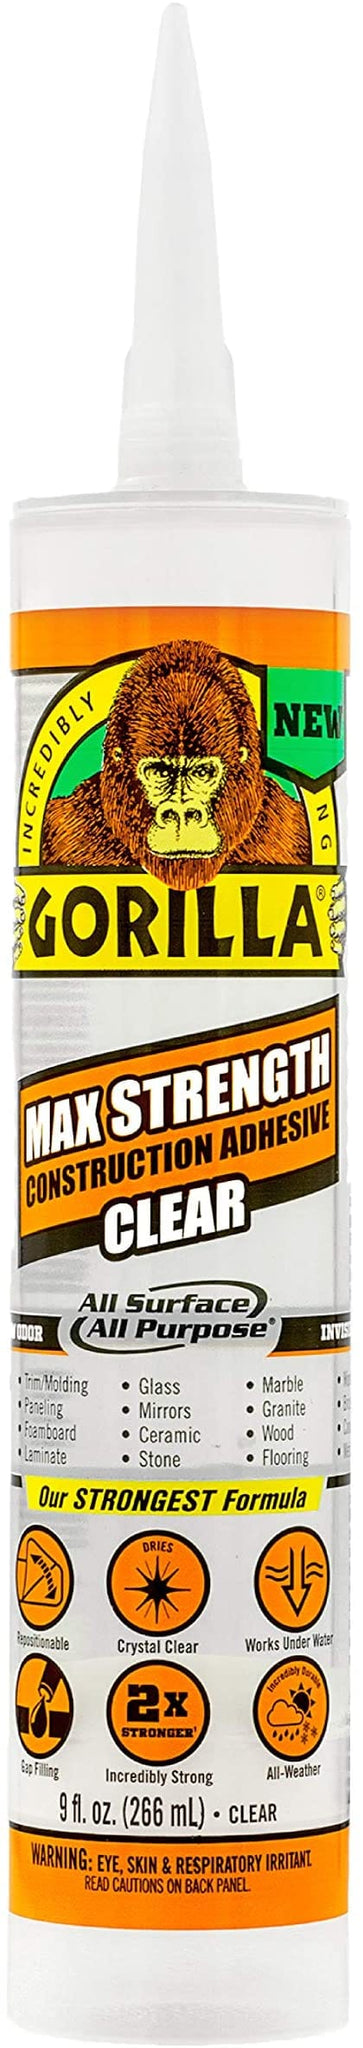 Gorilla Fabric Glue High Strength Adhesive Waterproof Clear, 2.5 fl oz, 2  Pack 